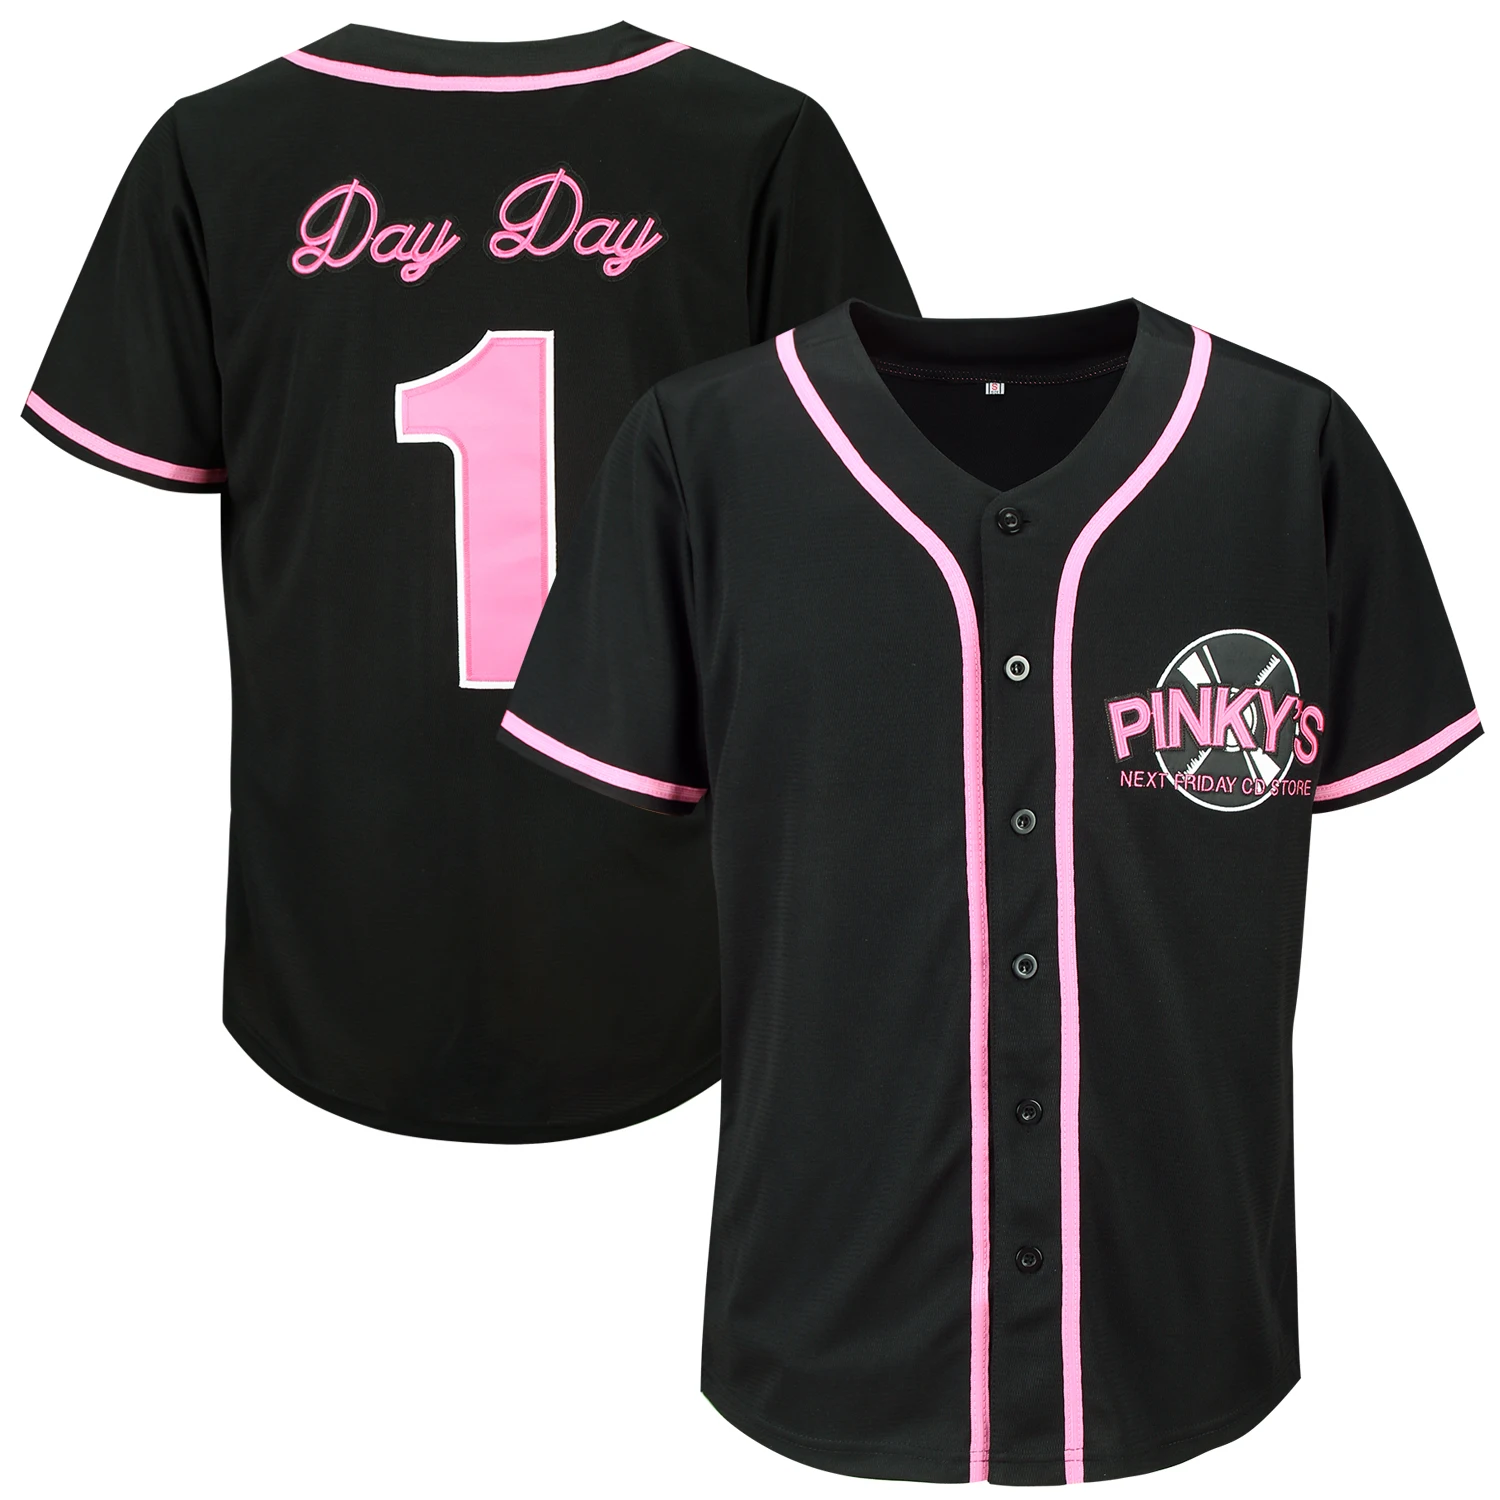 

Pinky's Next Friday CD Store Movie Day Day Jones Baseball Jerseys Hip Hop Fashion Trend Hip-Hop Black Jersey